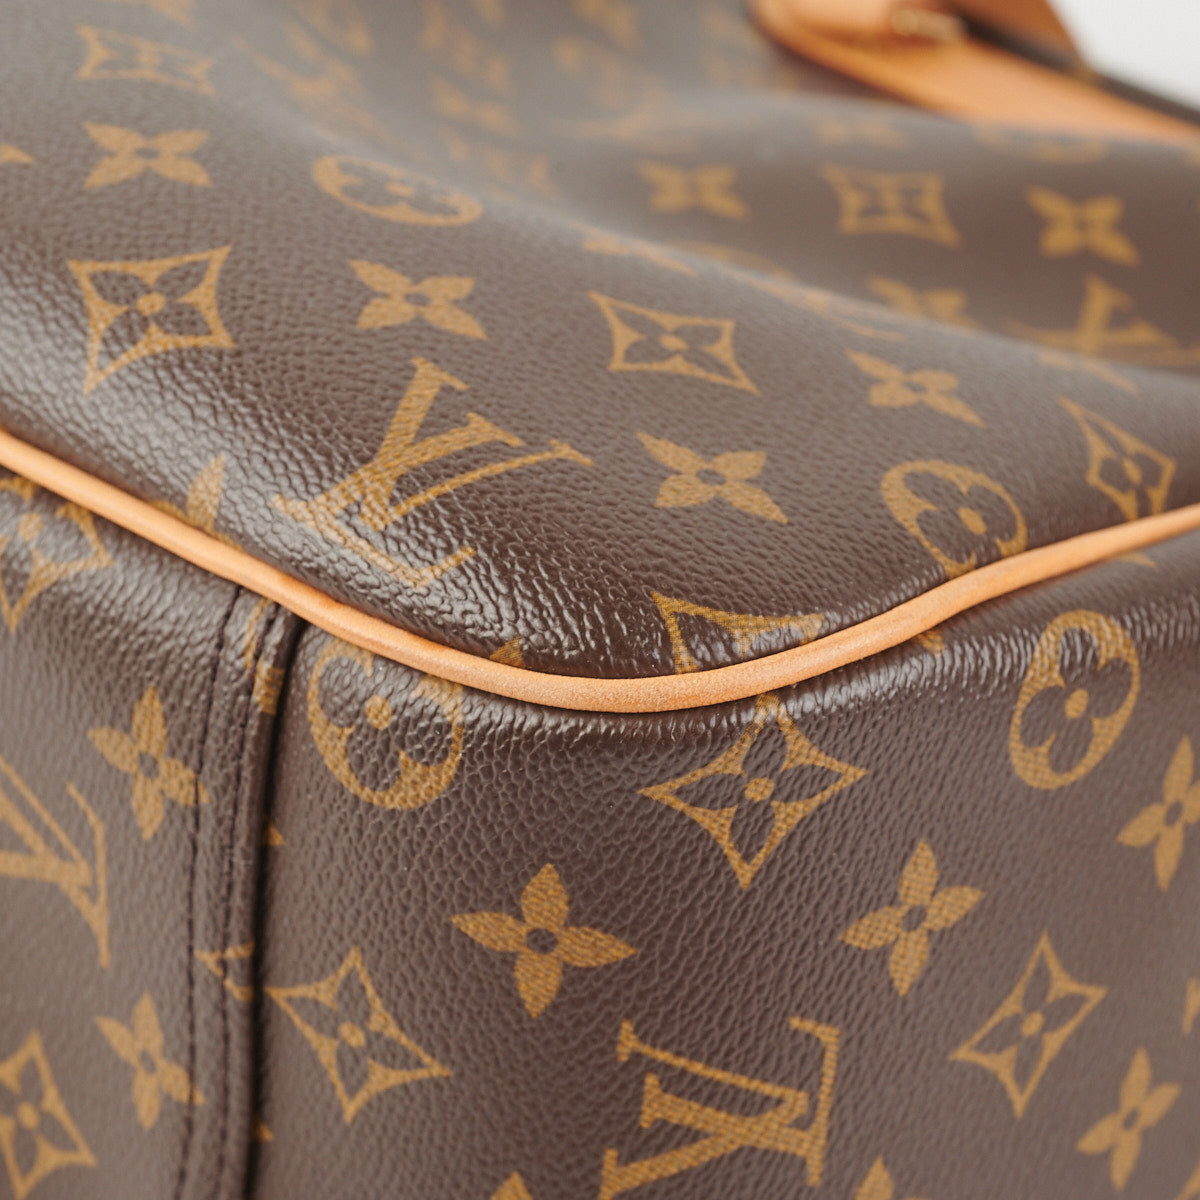 Buy Online Louis Vuitton-MONO EXCURSION SHOE BAG-M41450 in